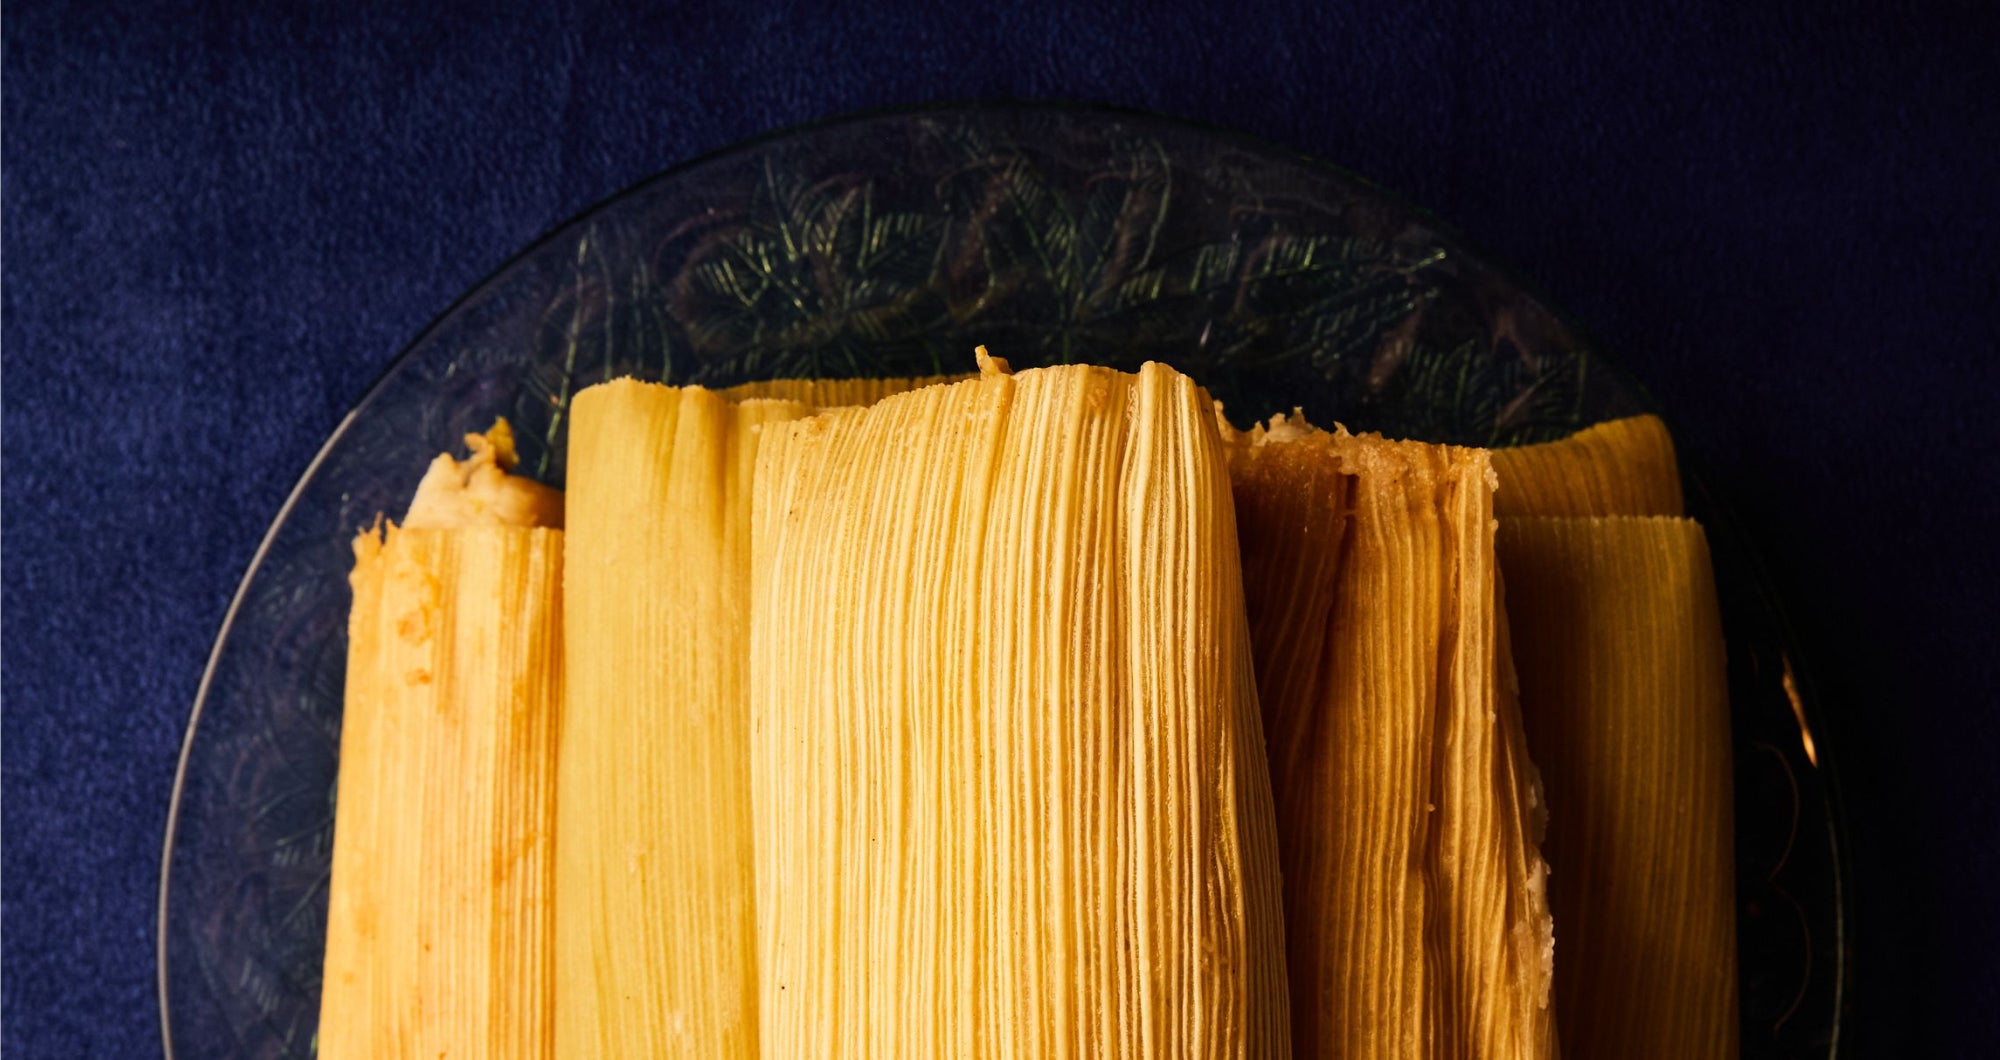 Masa Feature : Corn-tine tamales with Mira Evnine – Masienda